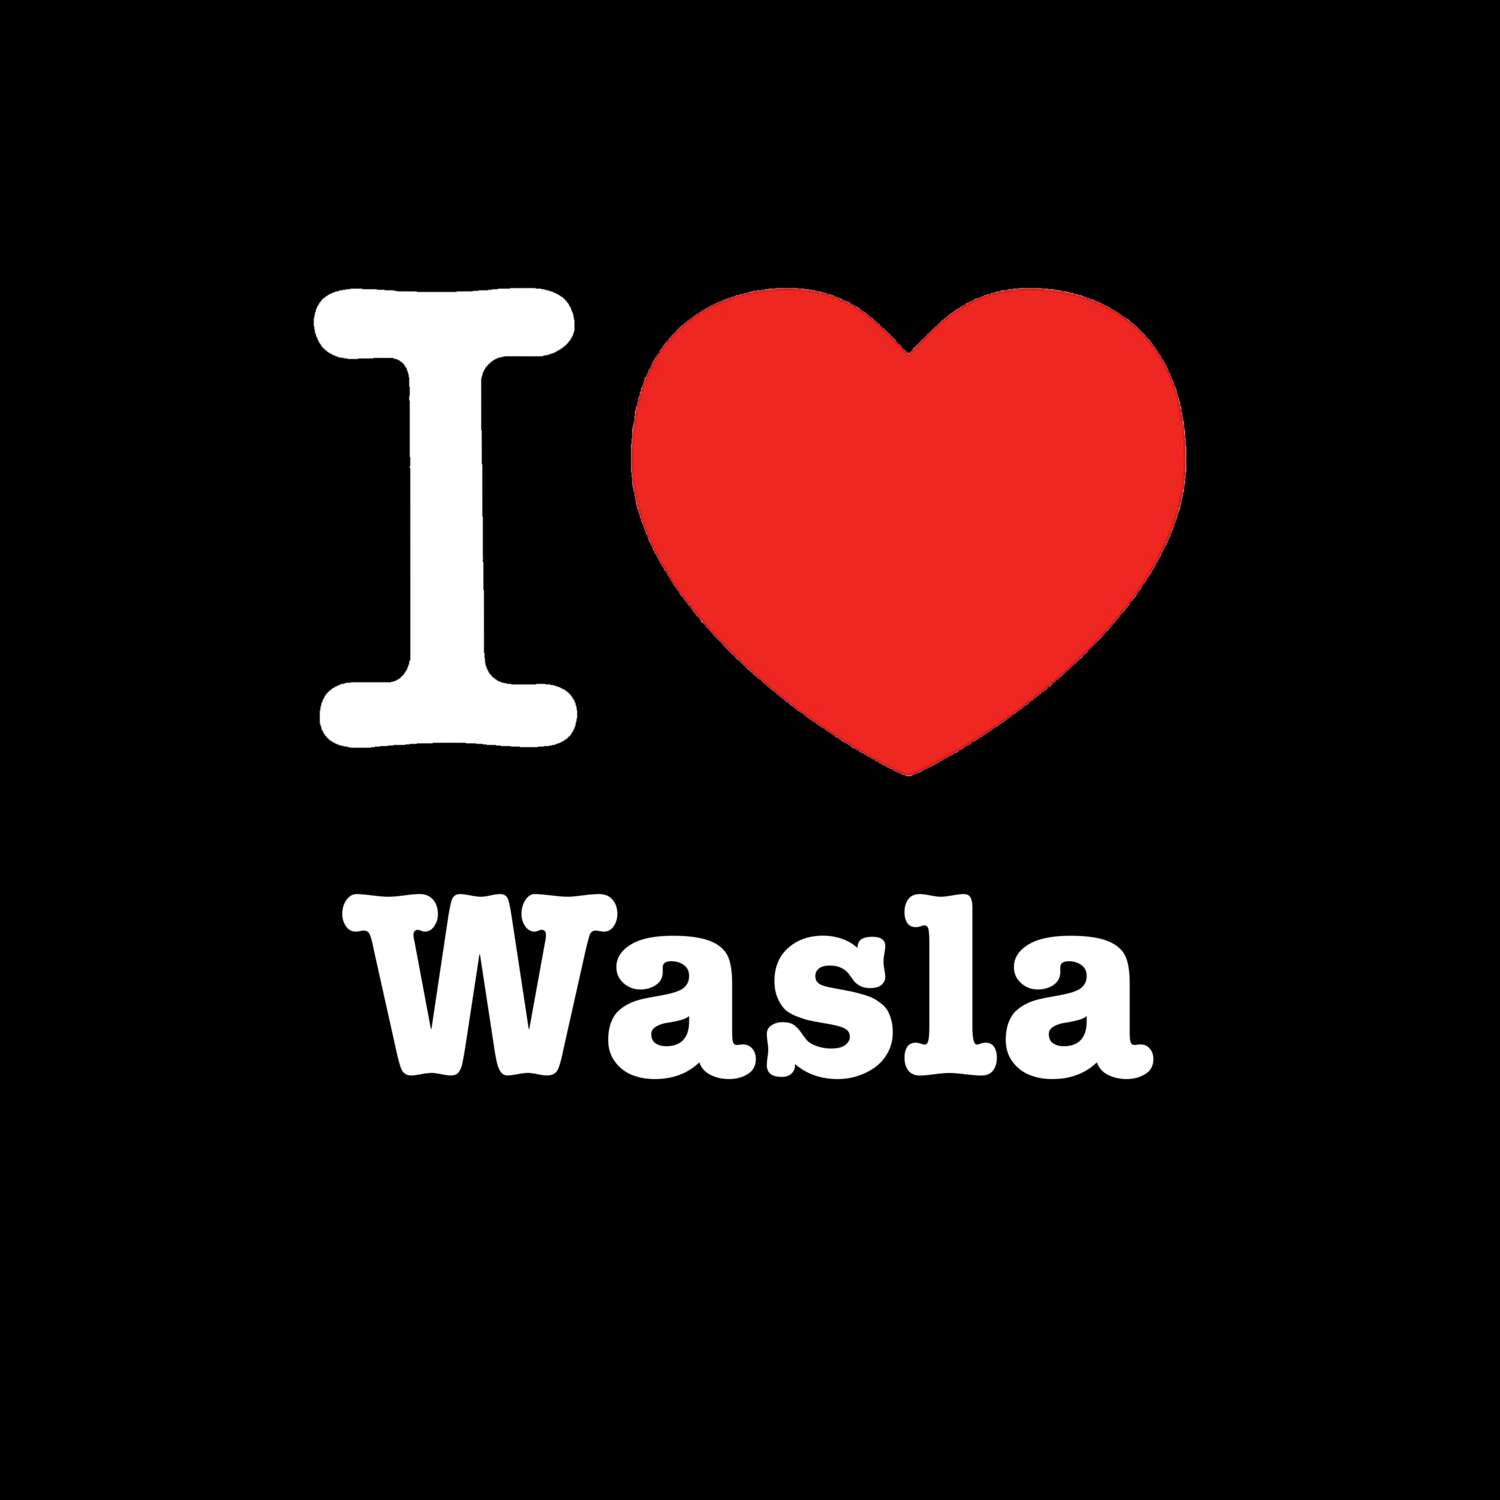 Wasla T-Shirt »I love«